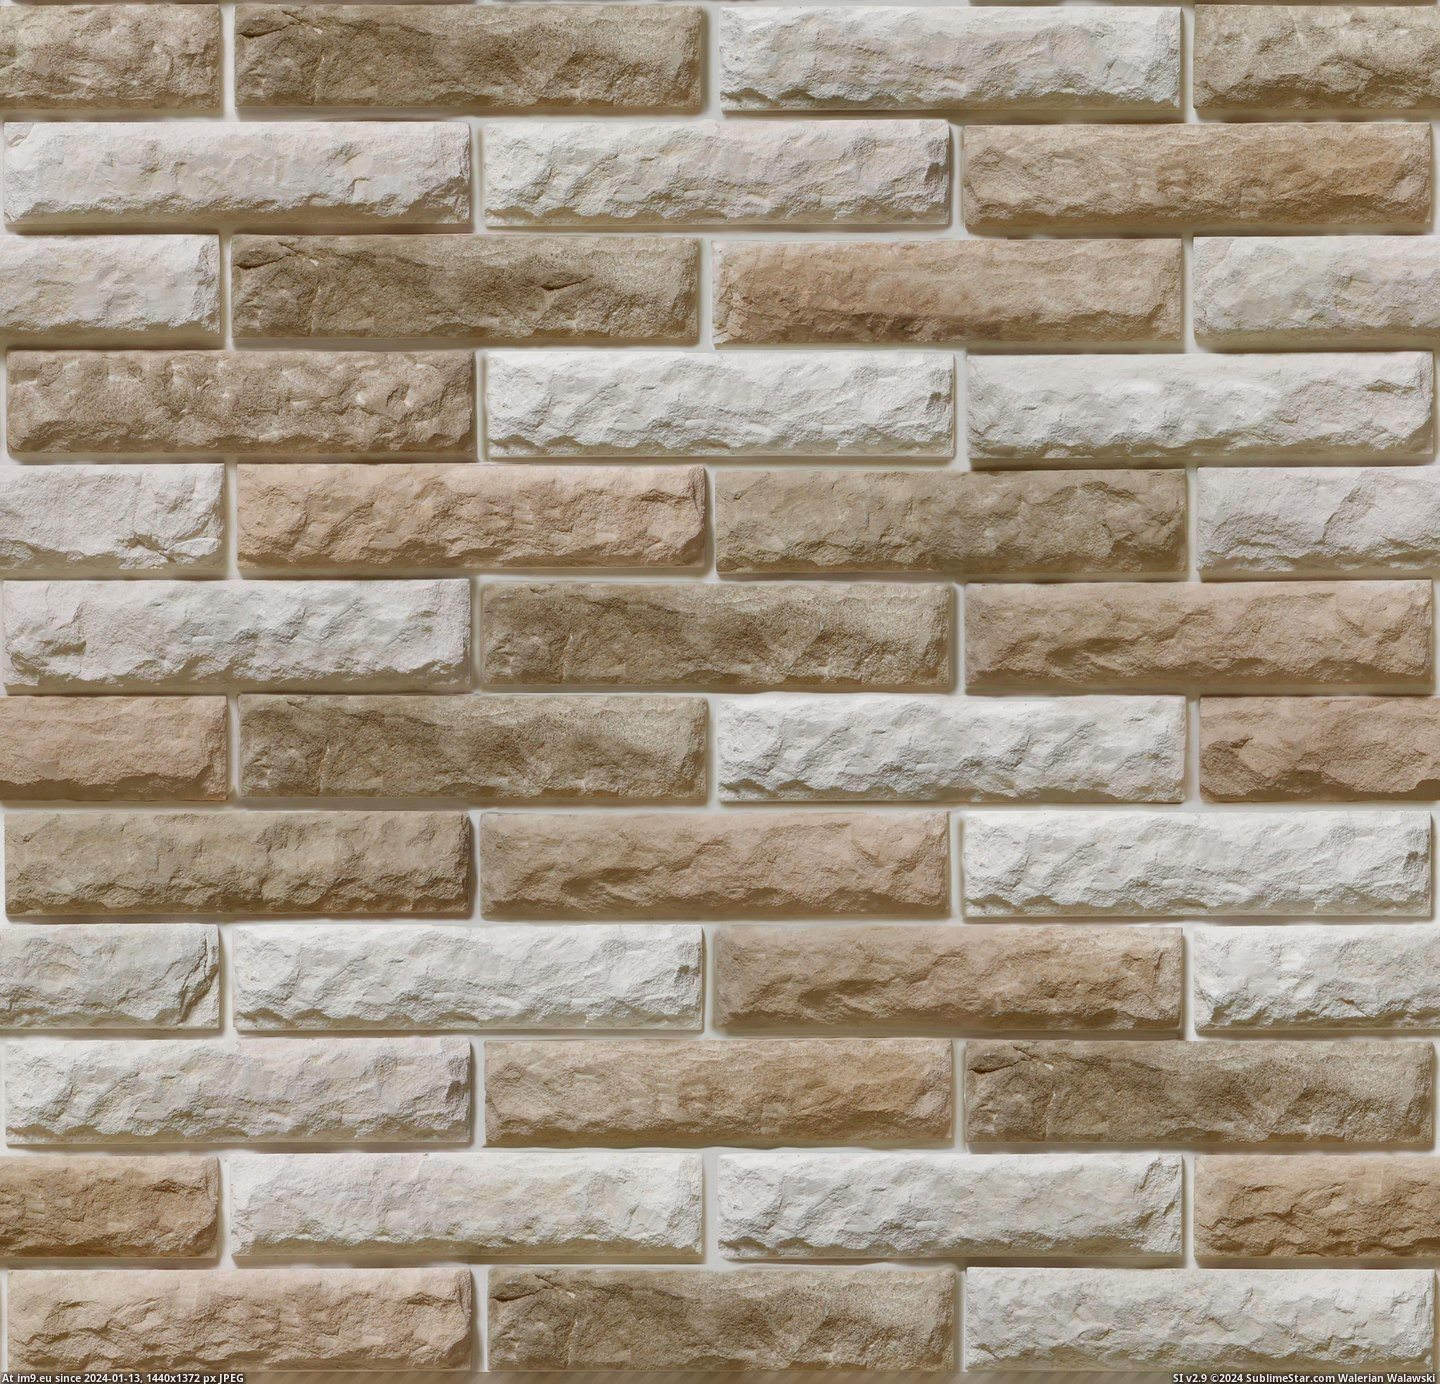 #Brick #Bristol #Texture Bristol (brick texture 1) Pic. (Image of album Brick walls textures and wallpapers))